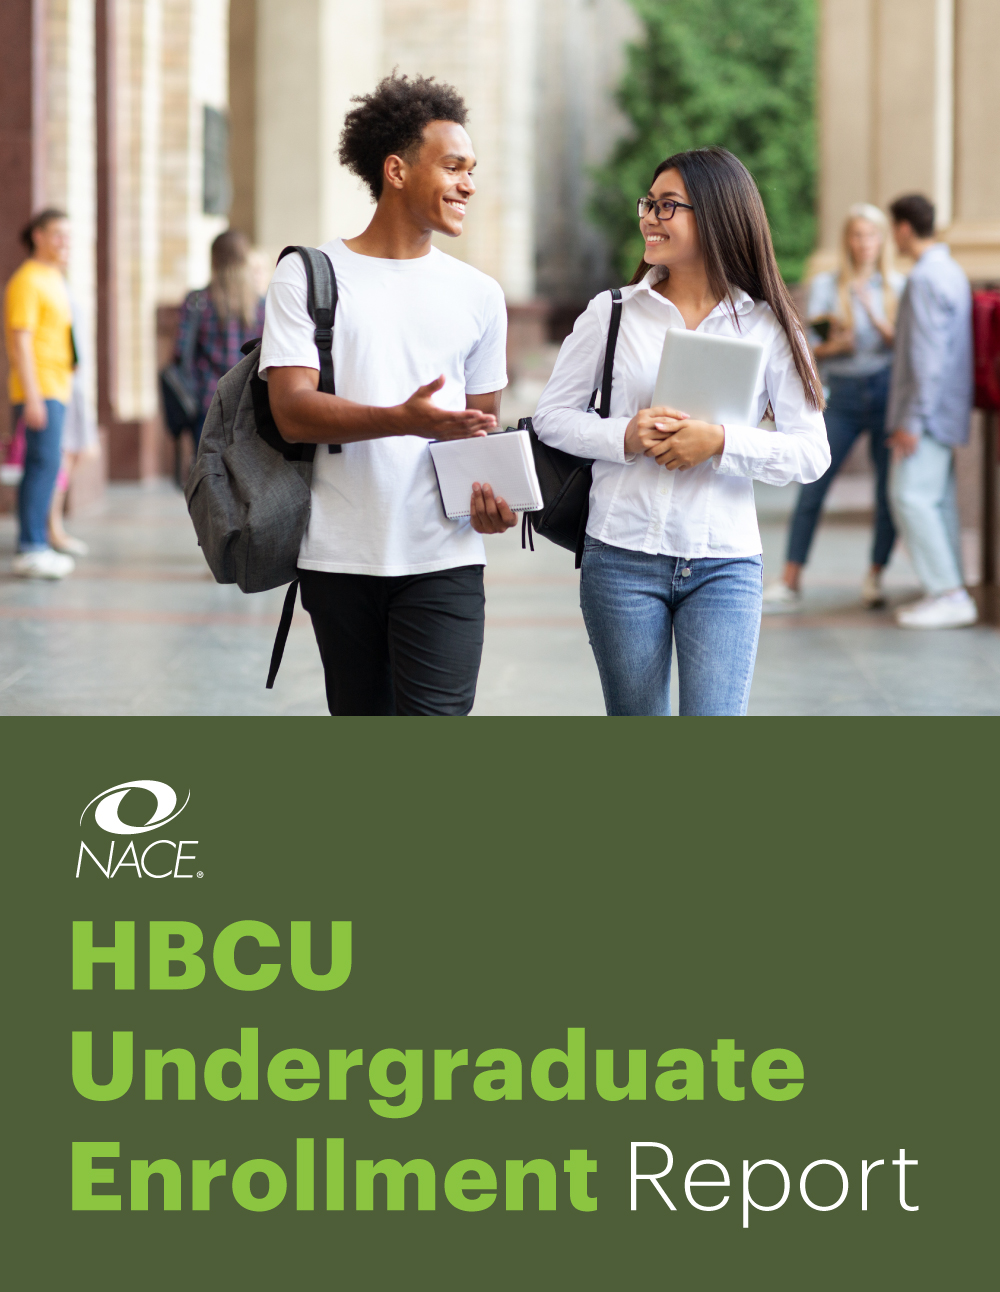 NACE Undergraduate Enrollment Report: HBCUS